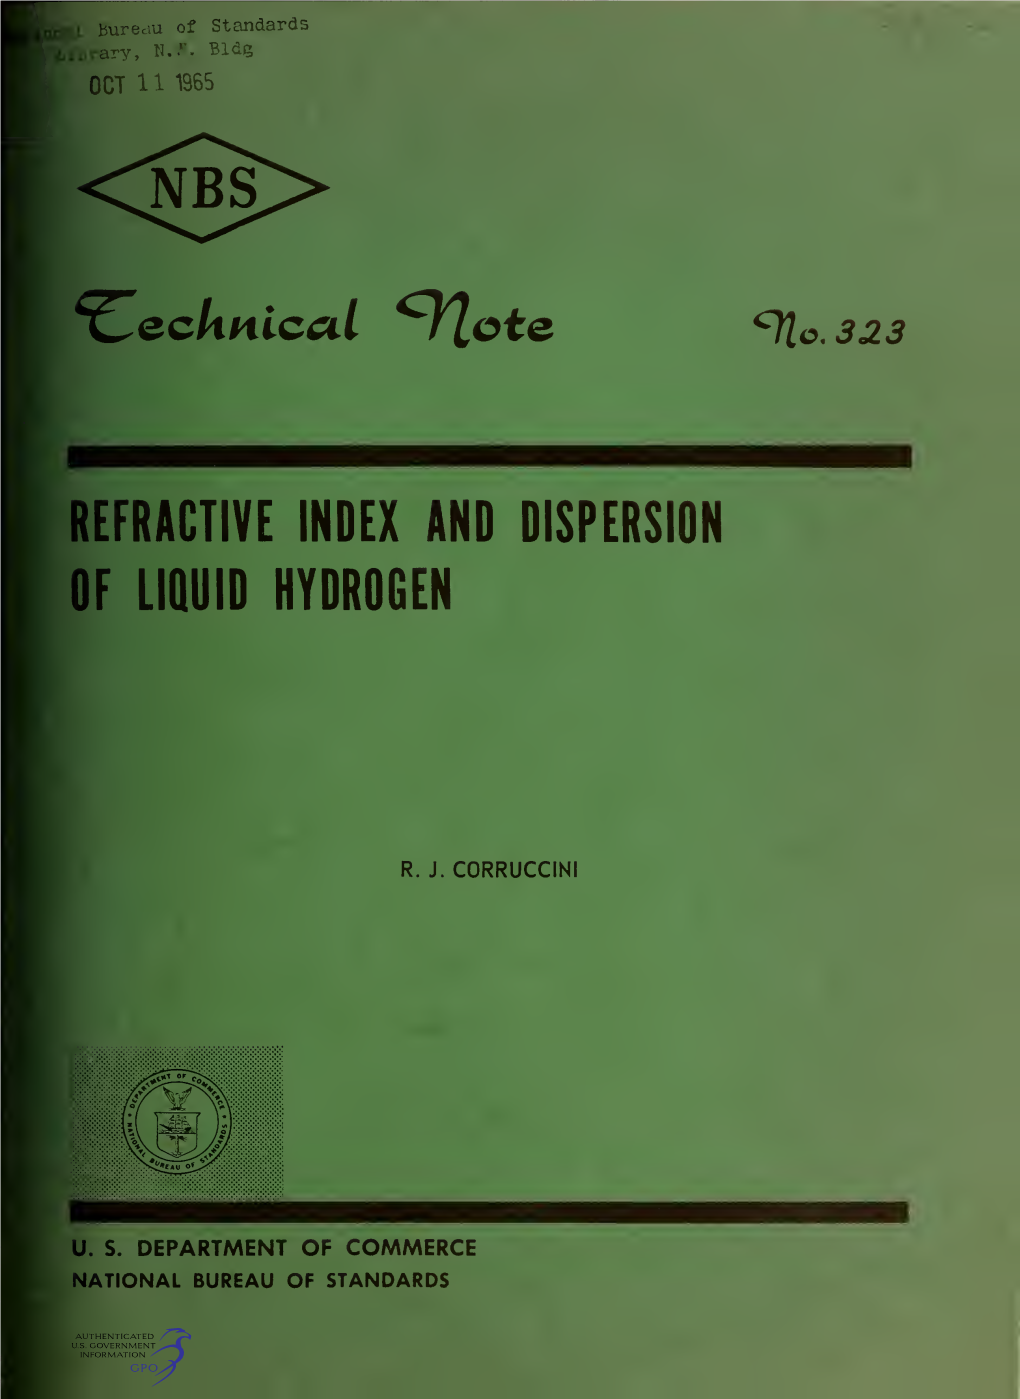 Refractive Index and Dispersion of Liquid Hydrogen